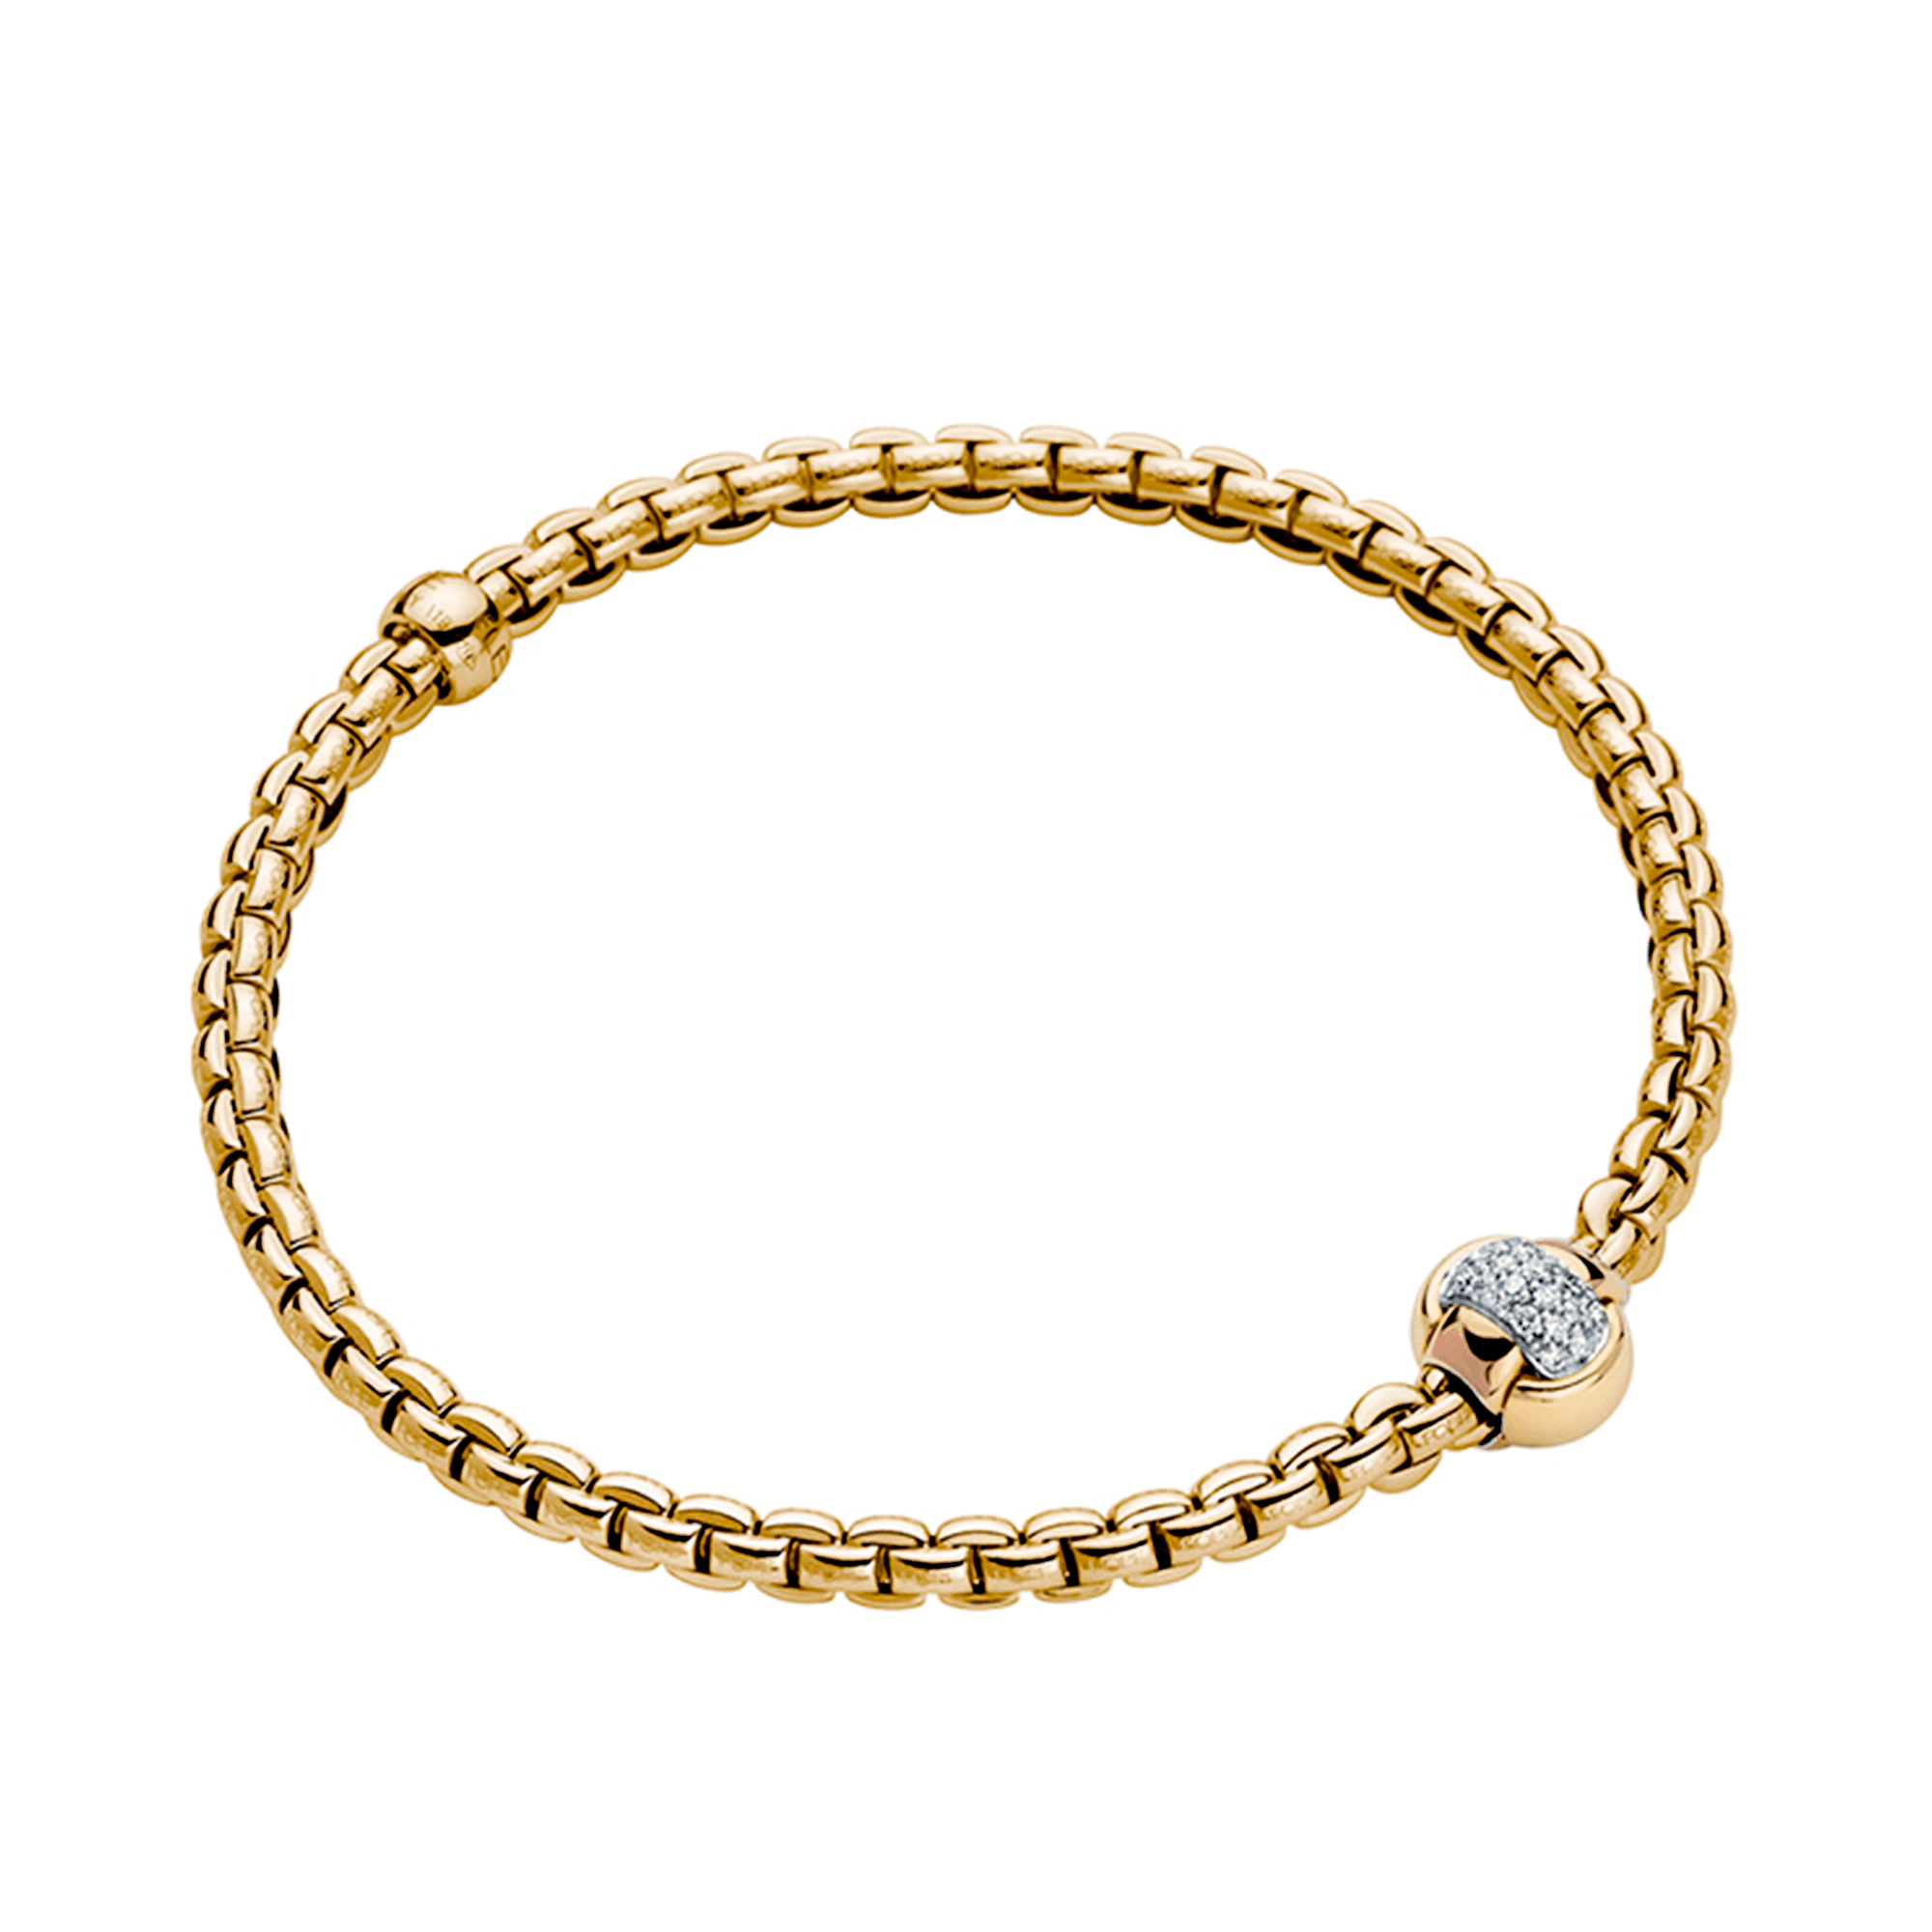 Eka 18ct Yellow Gold Bracelet With Pave Diamond Set Rondel